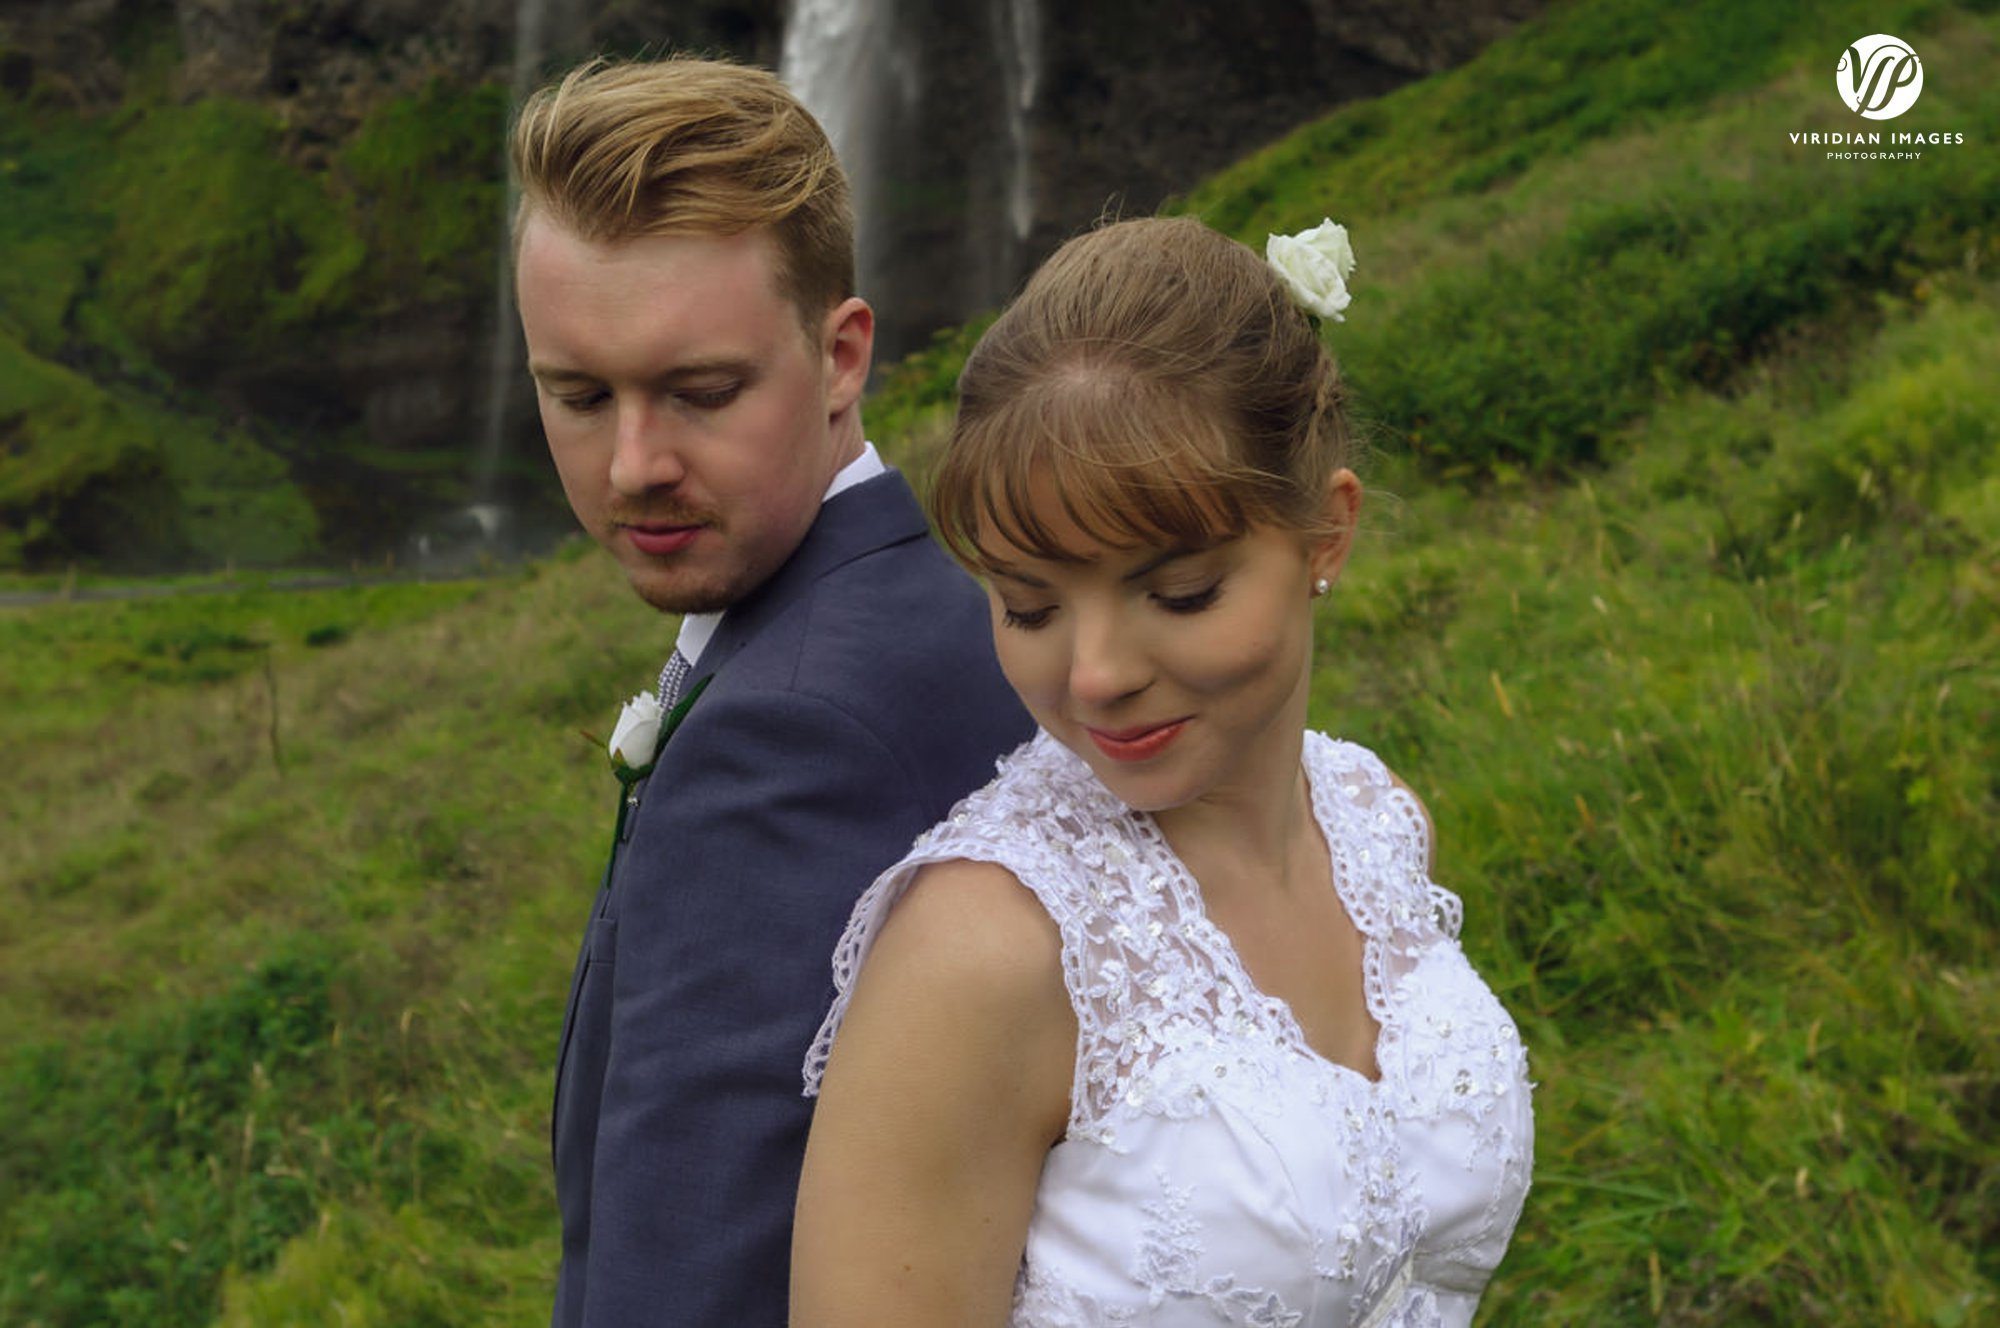 Loving moment of couple at Seljalandsfoss waterfall Iceland